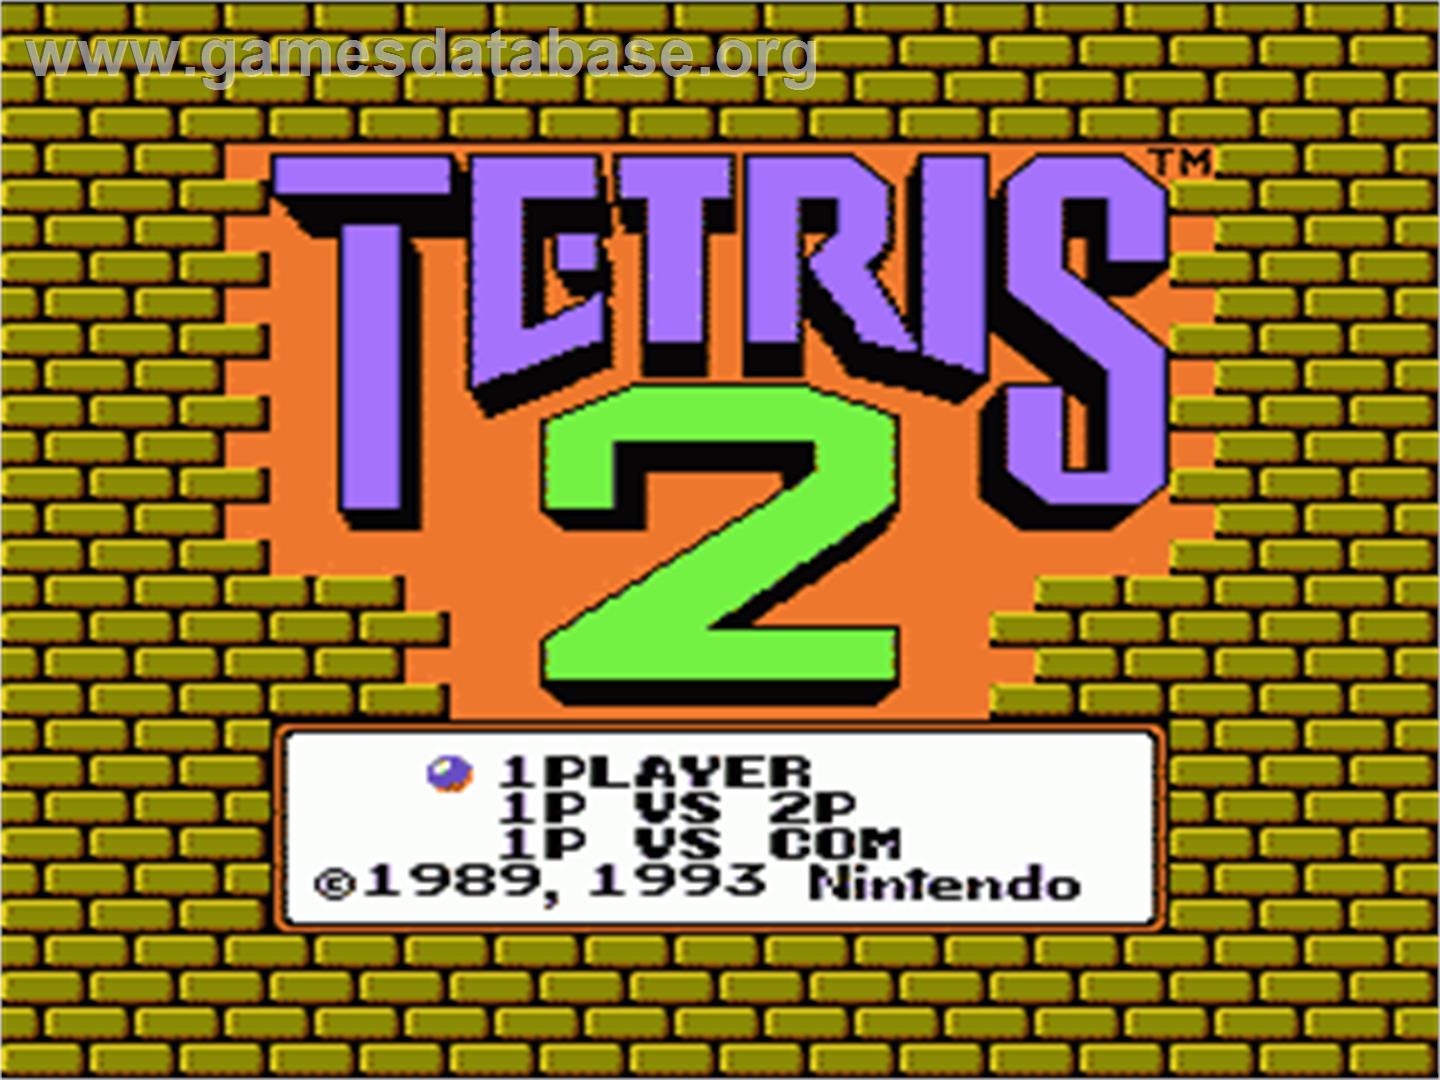 Tetris 2 - Nintendo NES - Artwork - Title Screen